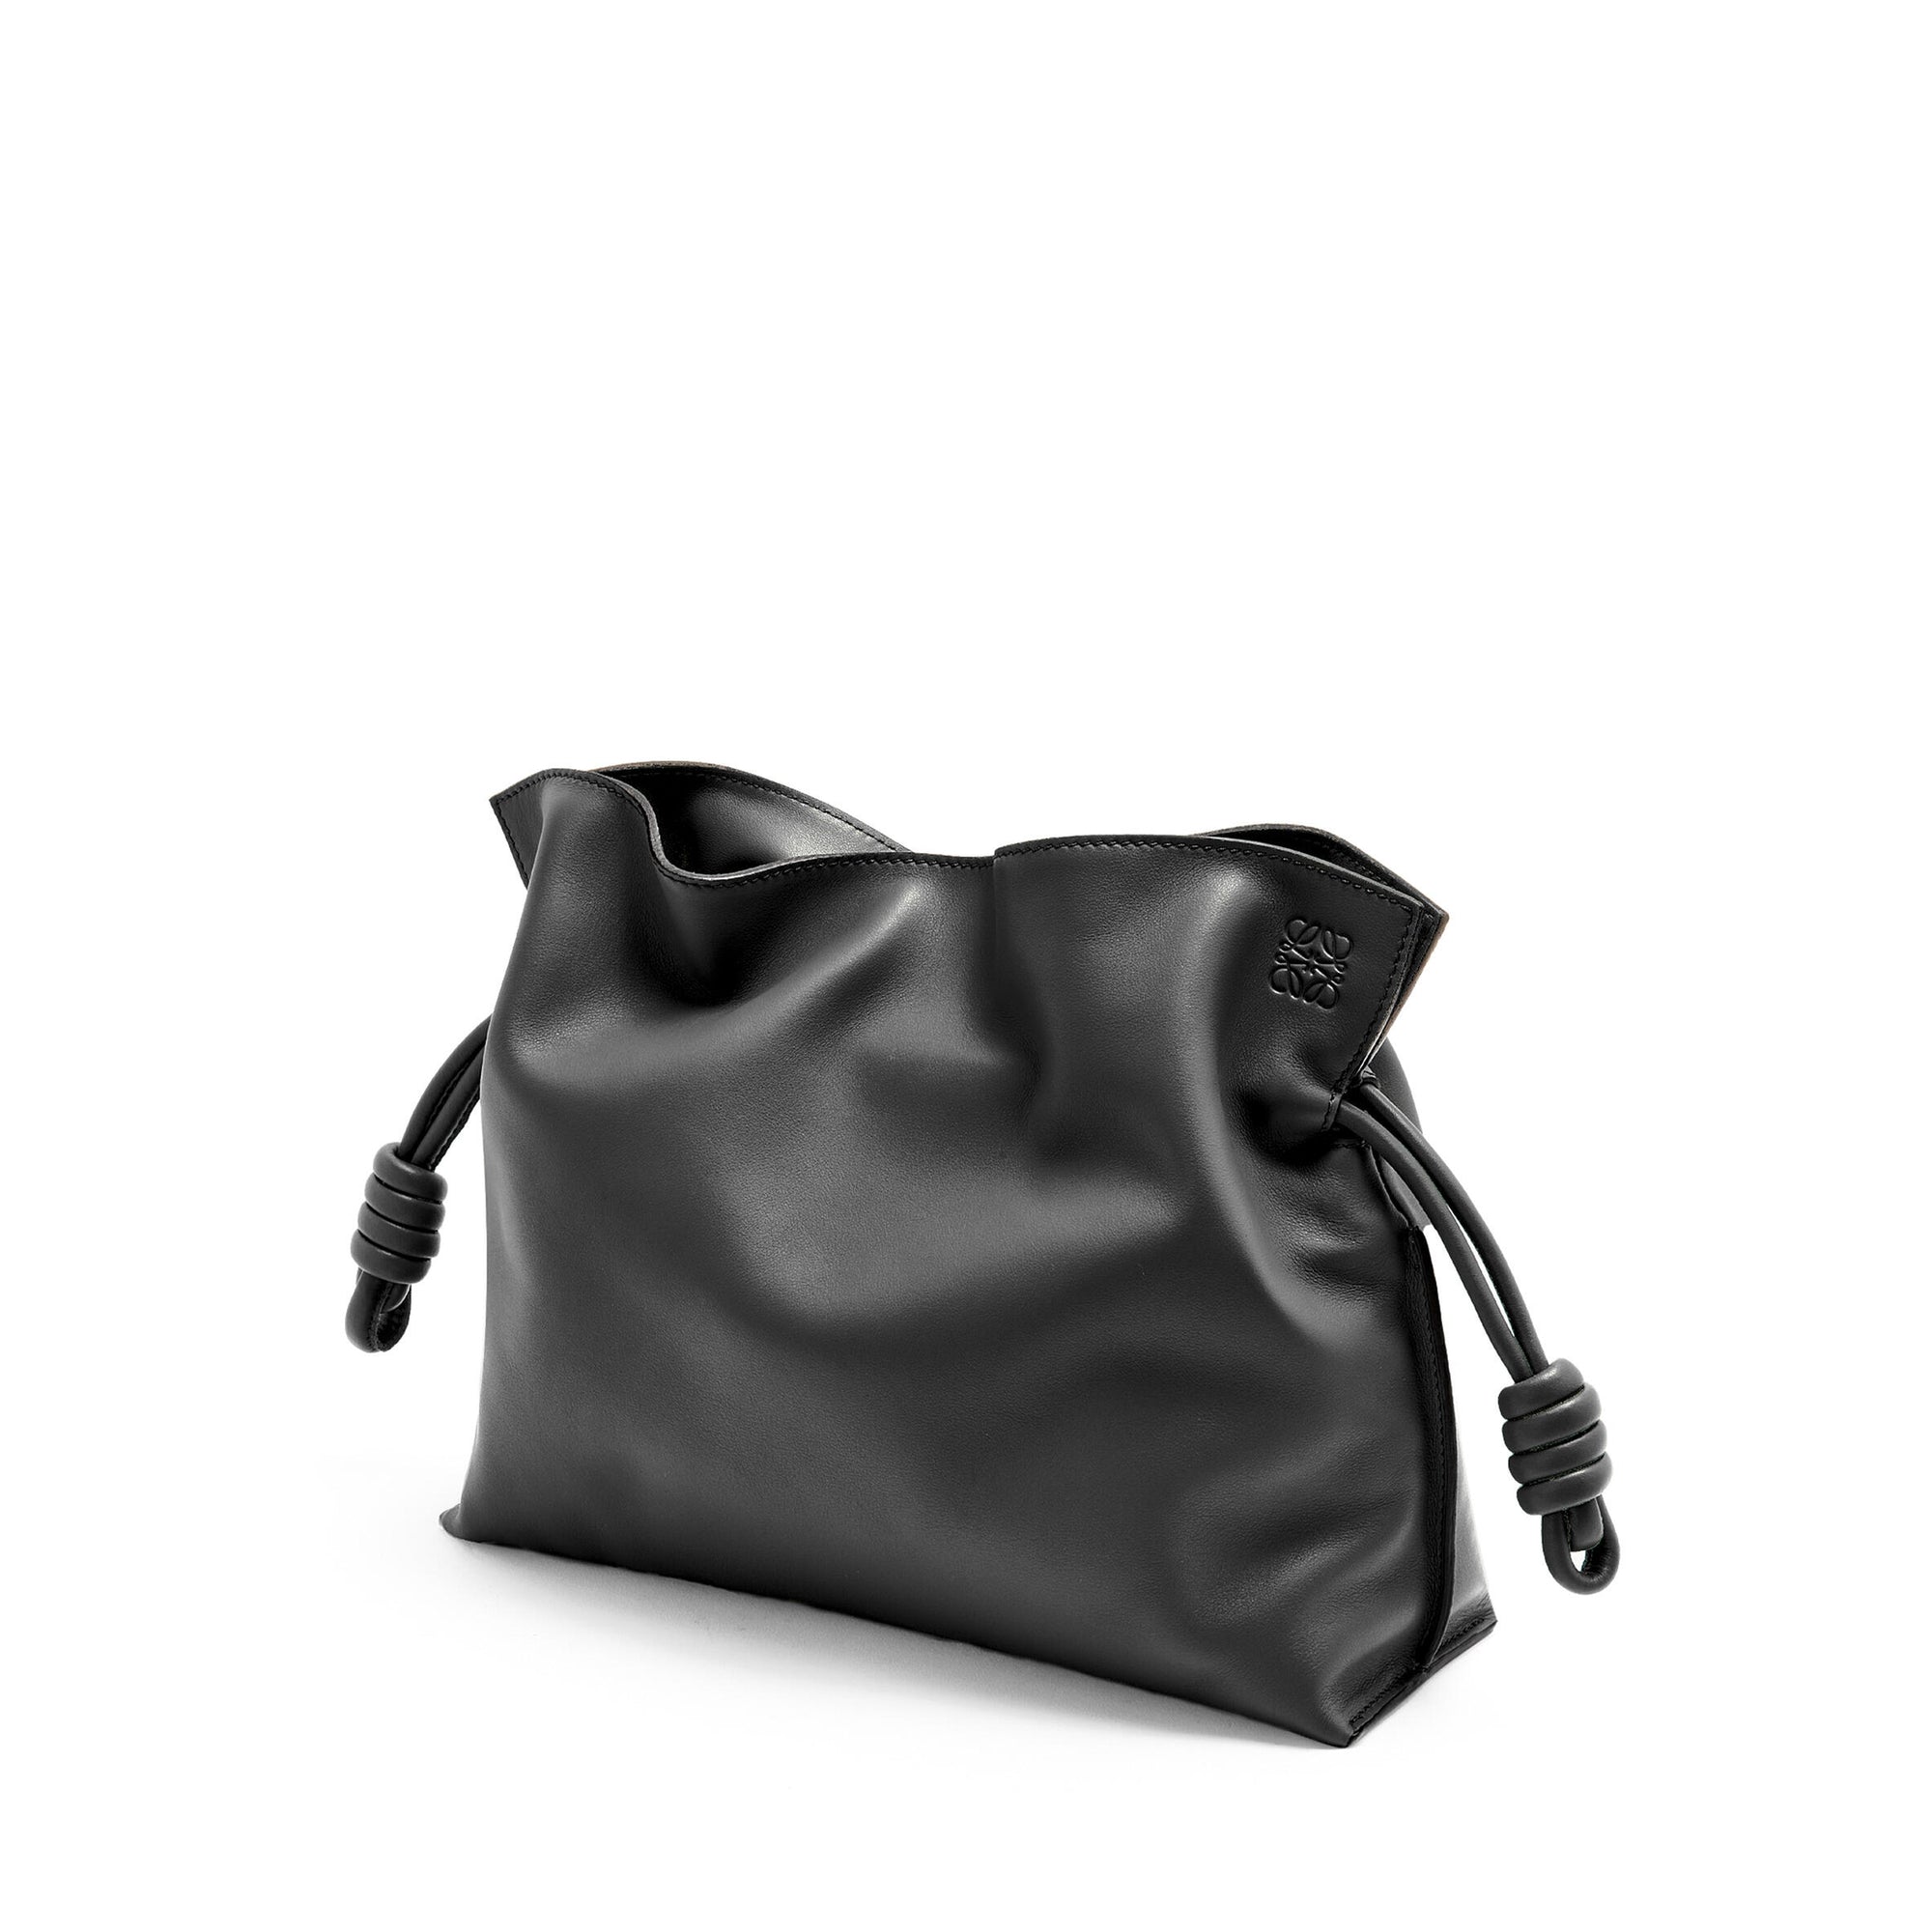 Loewe - Women’s Flamenco Clutch Bag - (Black) view 2